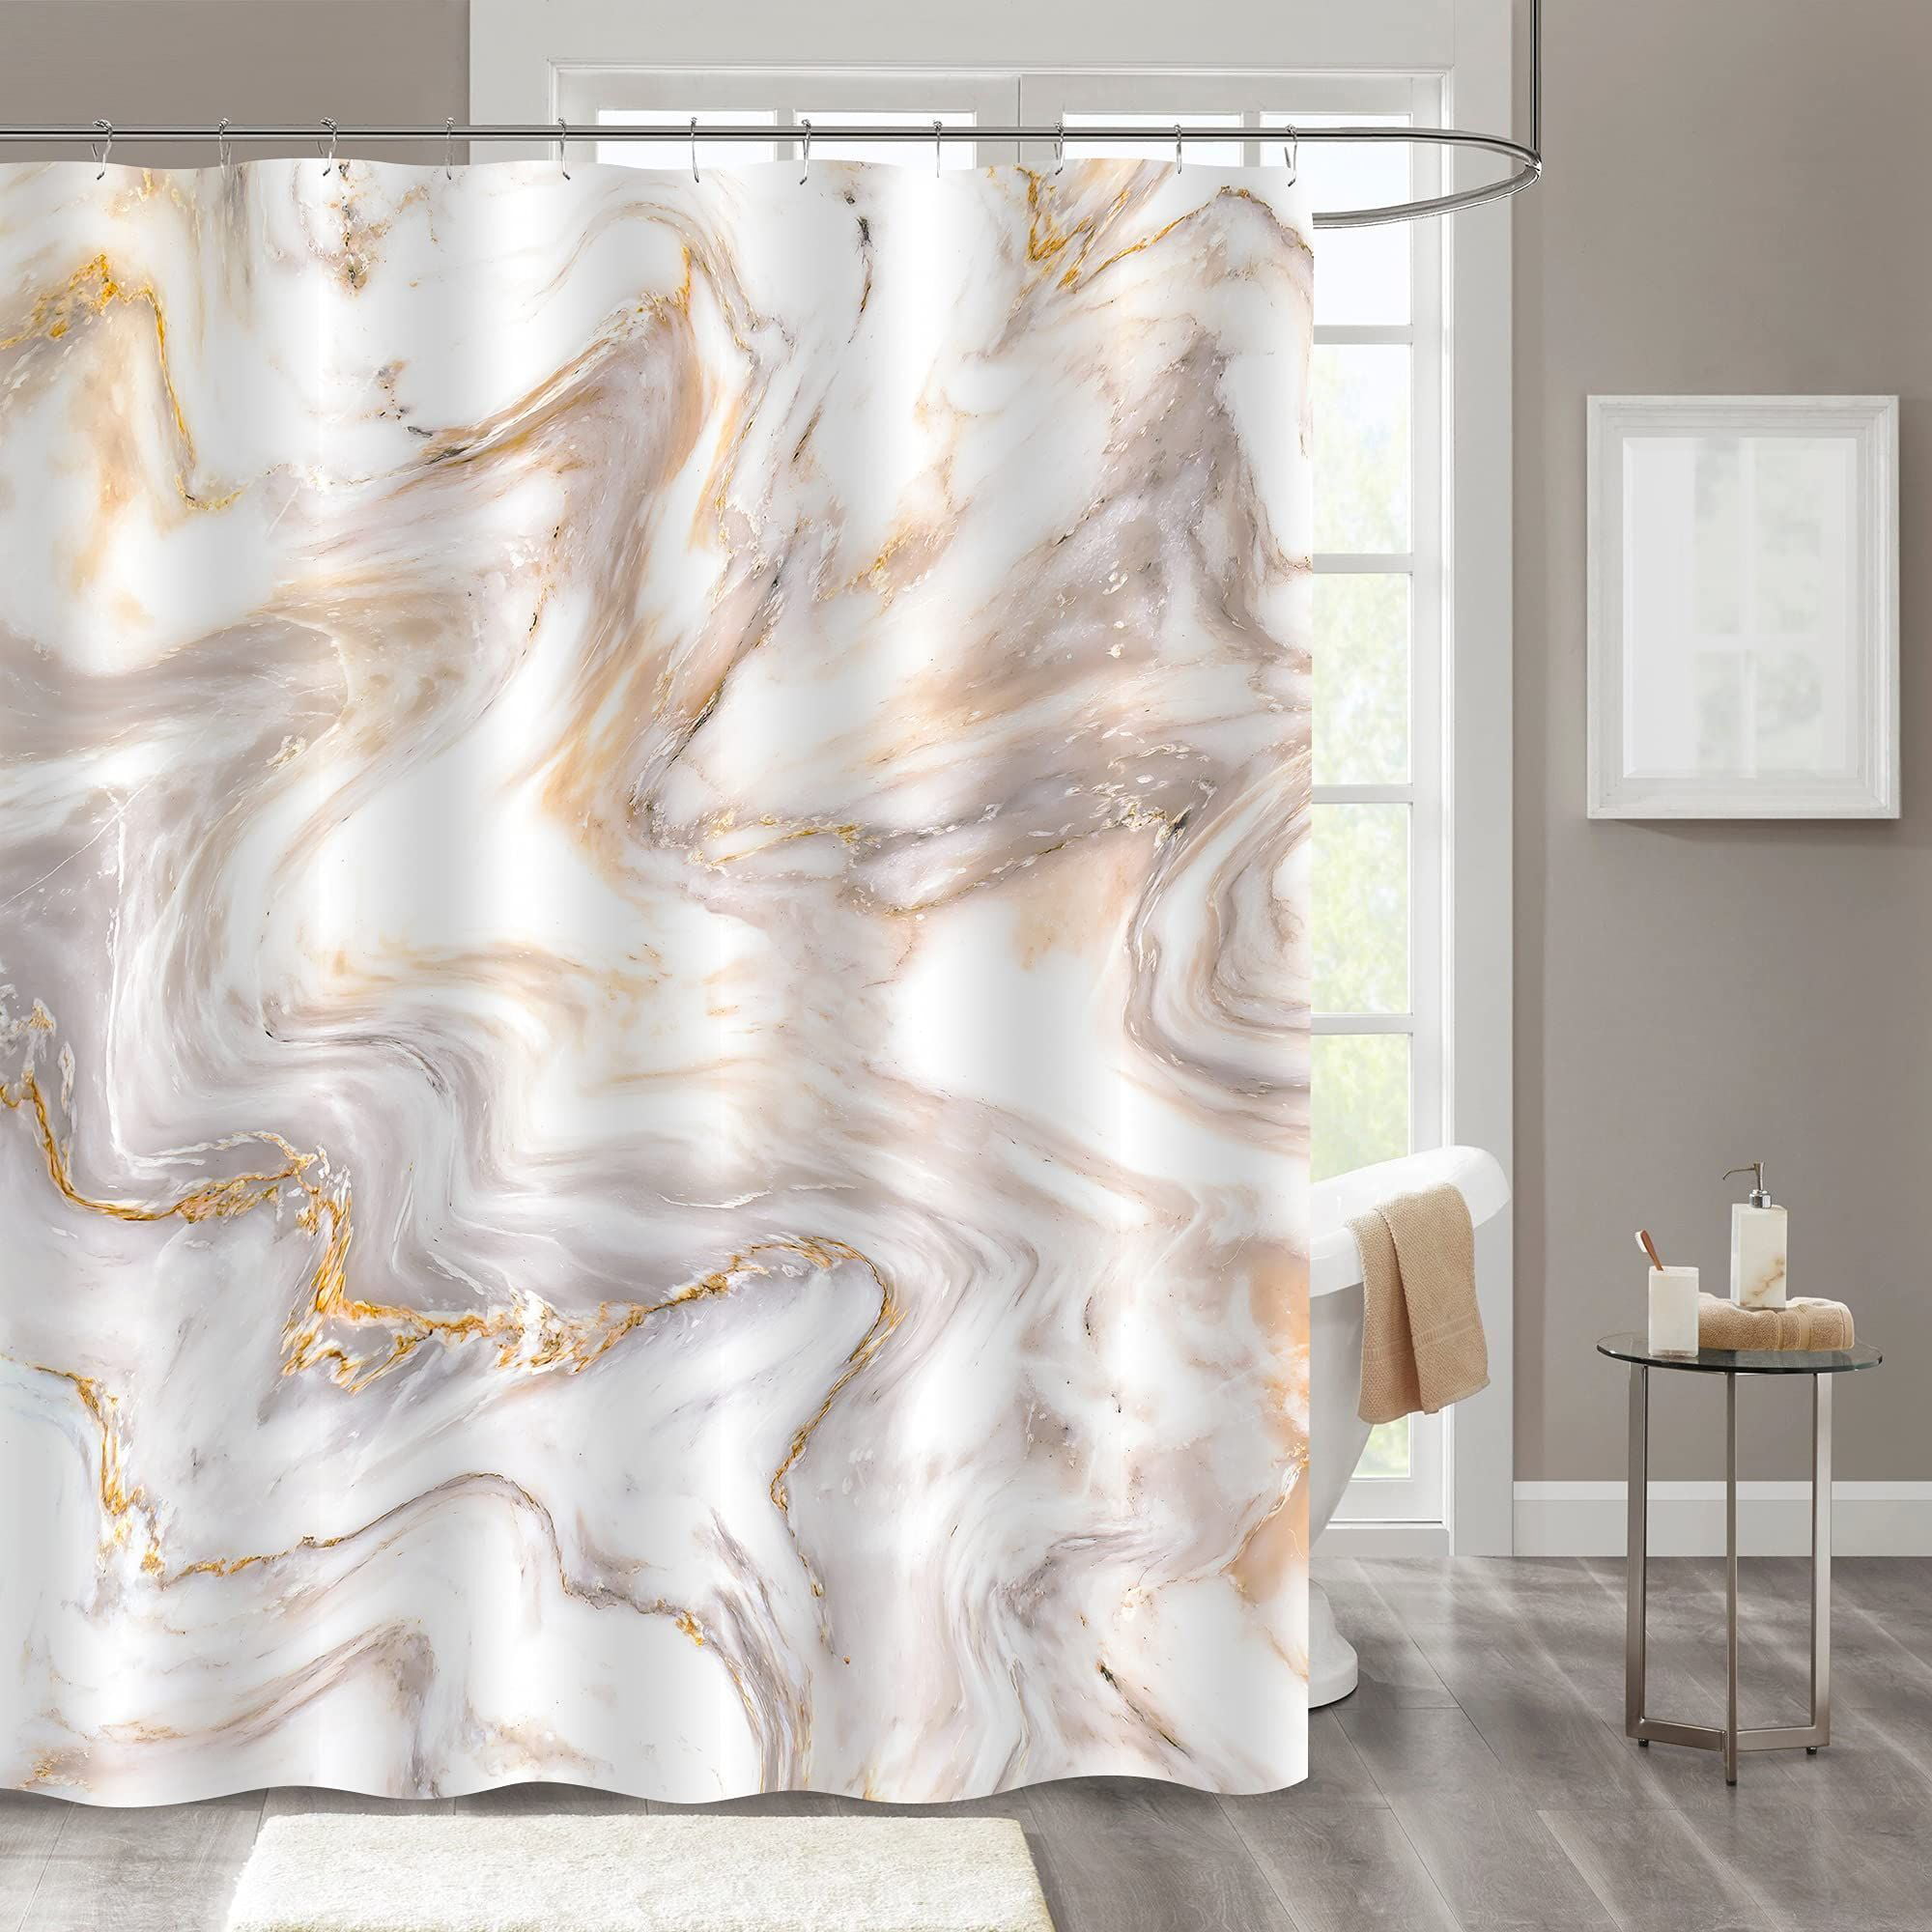 Gray Marble Surface Texture Bathroom Waterproof Fabric Shower Curtain Set 72x72" 